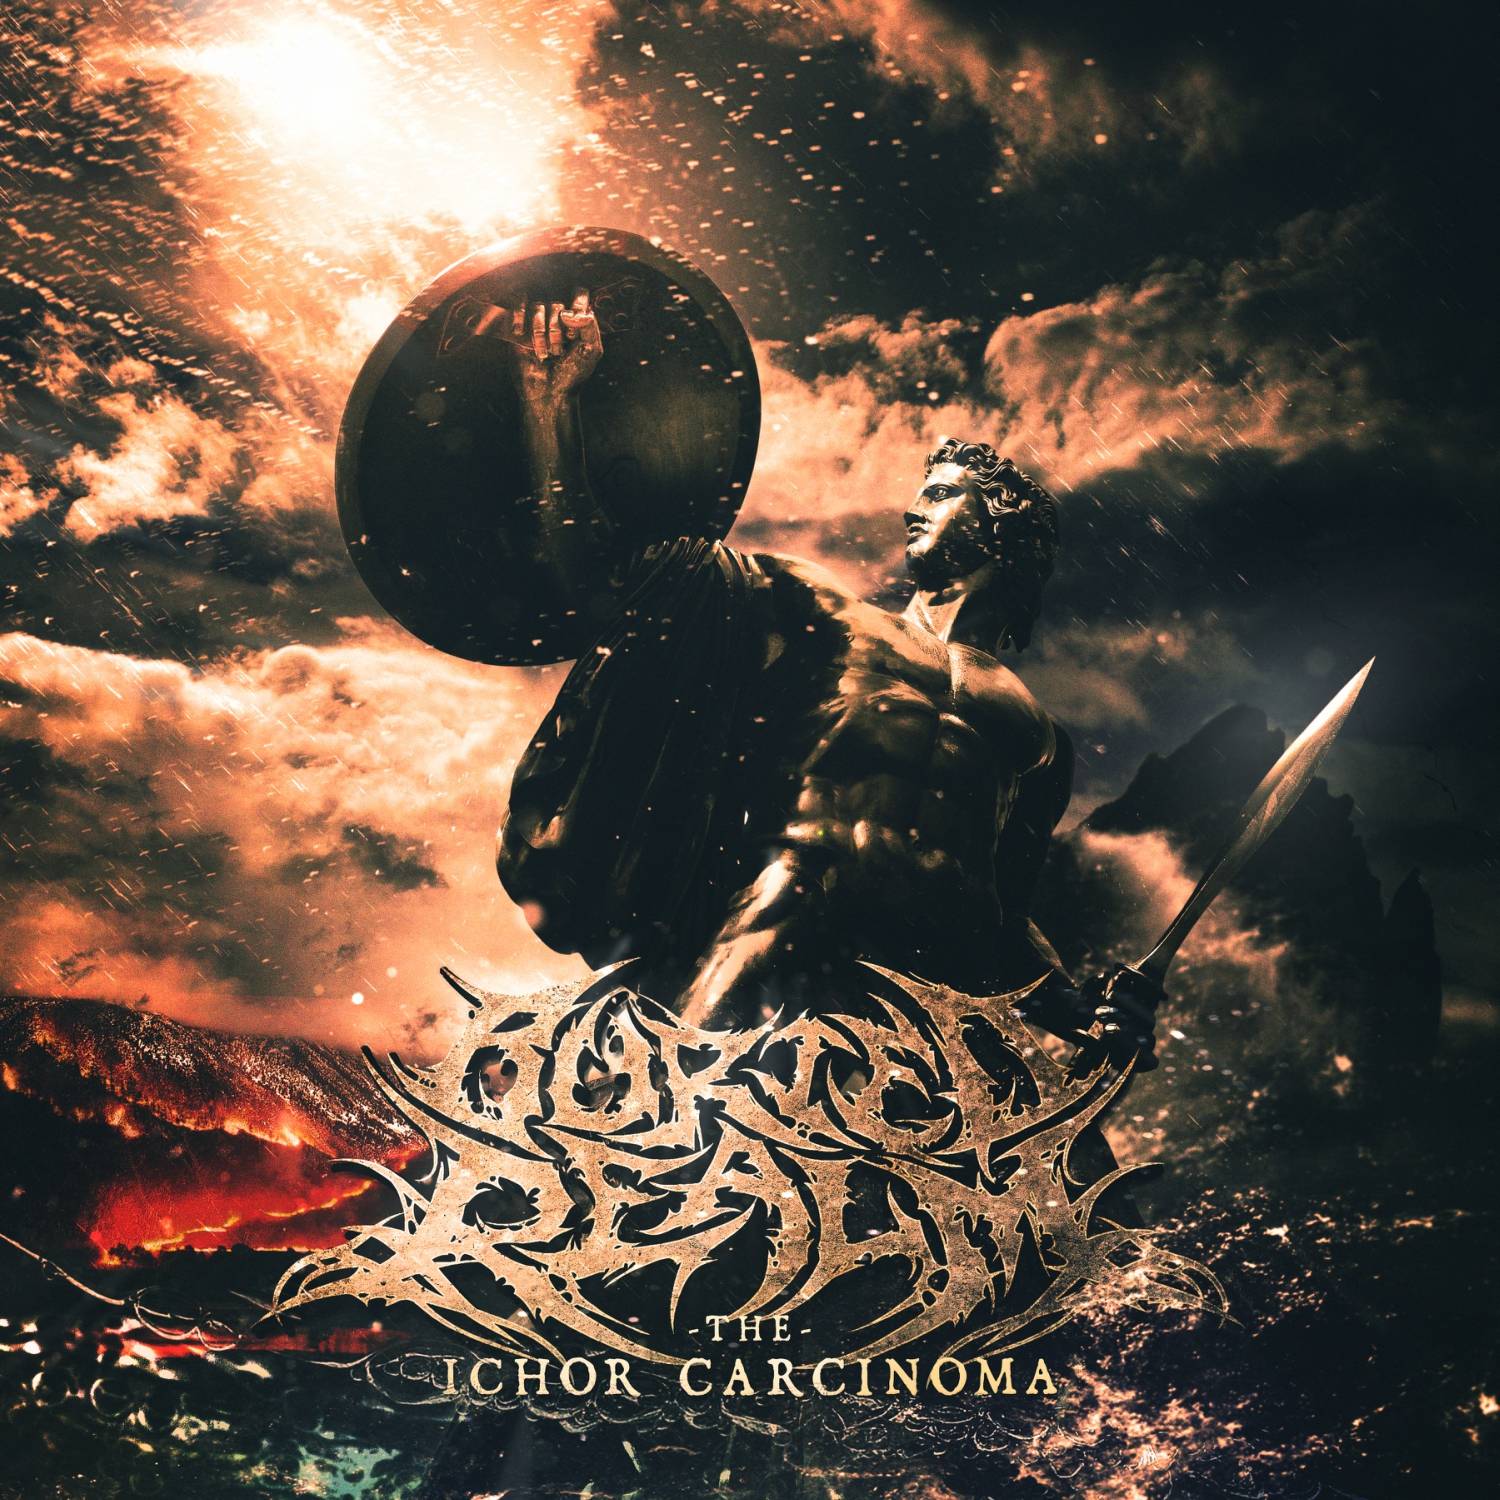 Buried Realm : "The Ichor Carcinoma" CD & Digital September 29 self release.